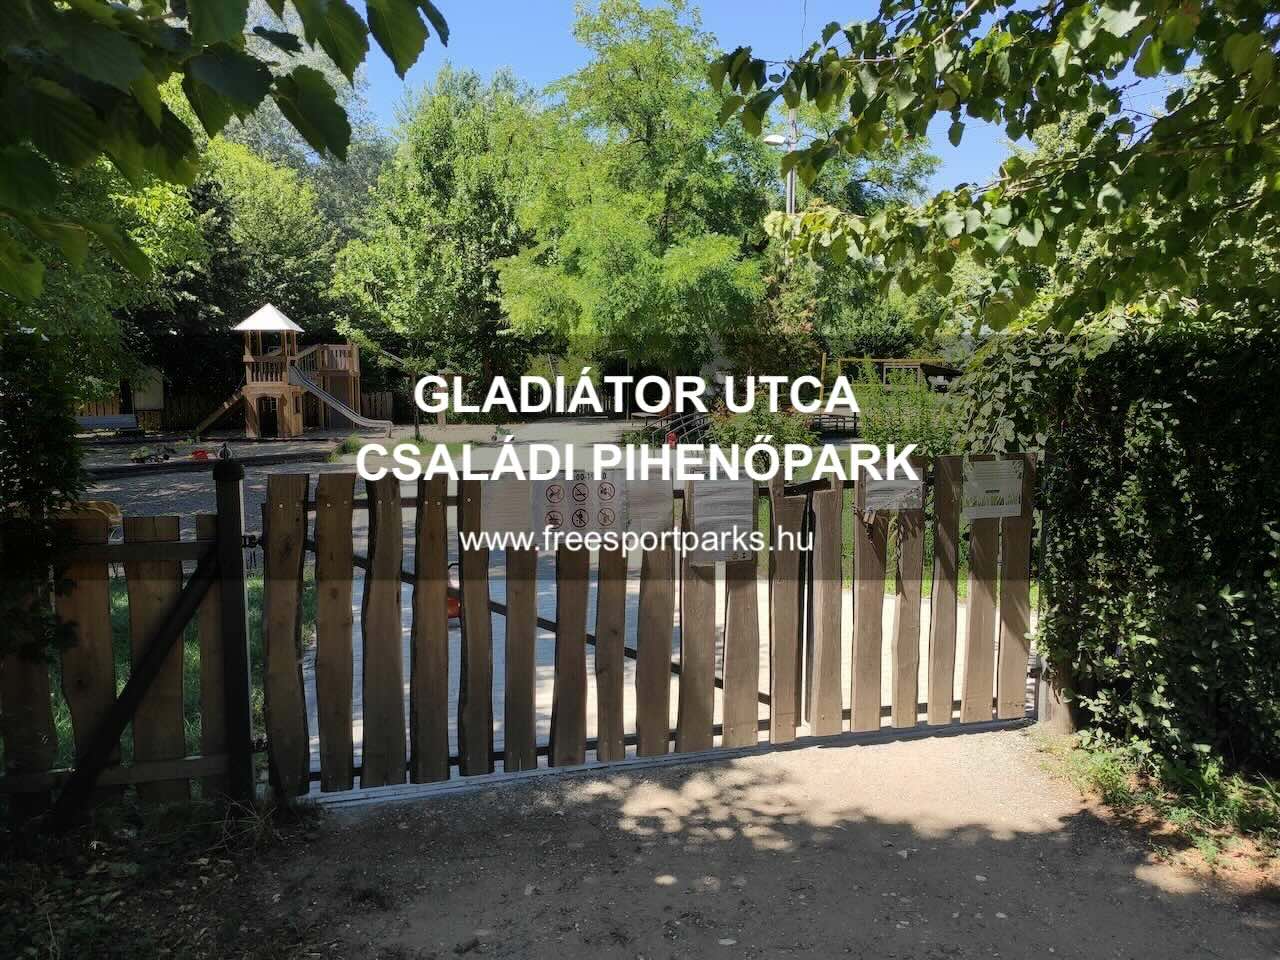 Gladiátor utca családi pihenőpark Óbudán, Free Sport Parks blog